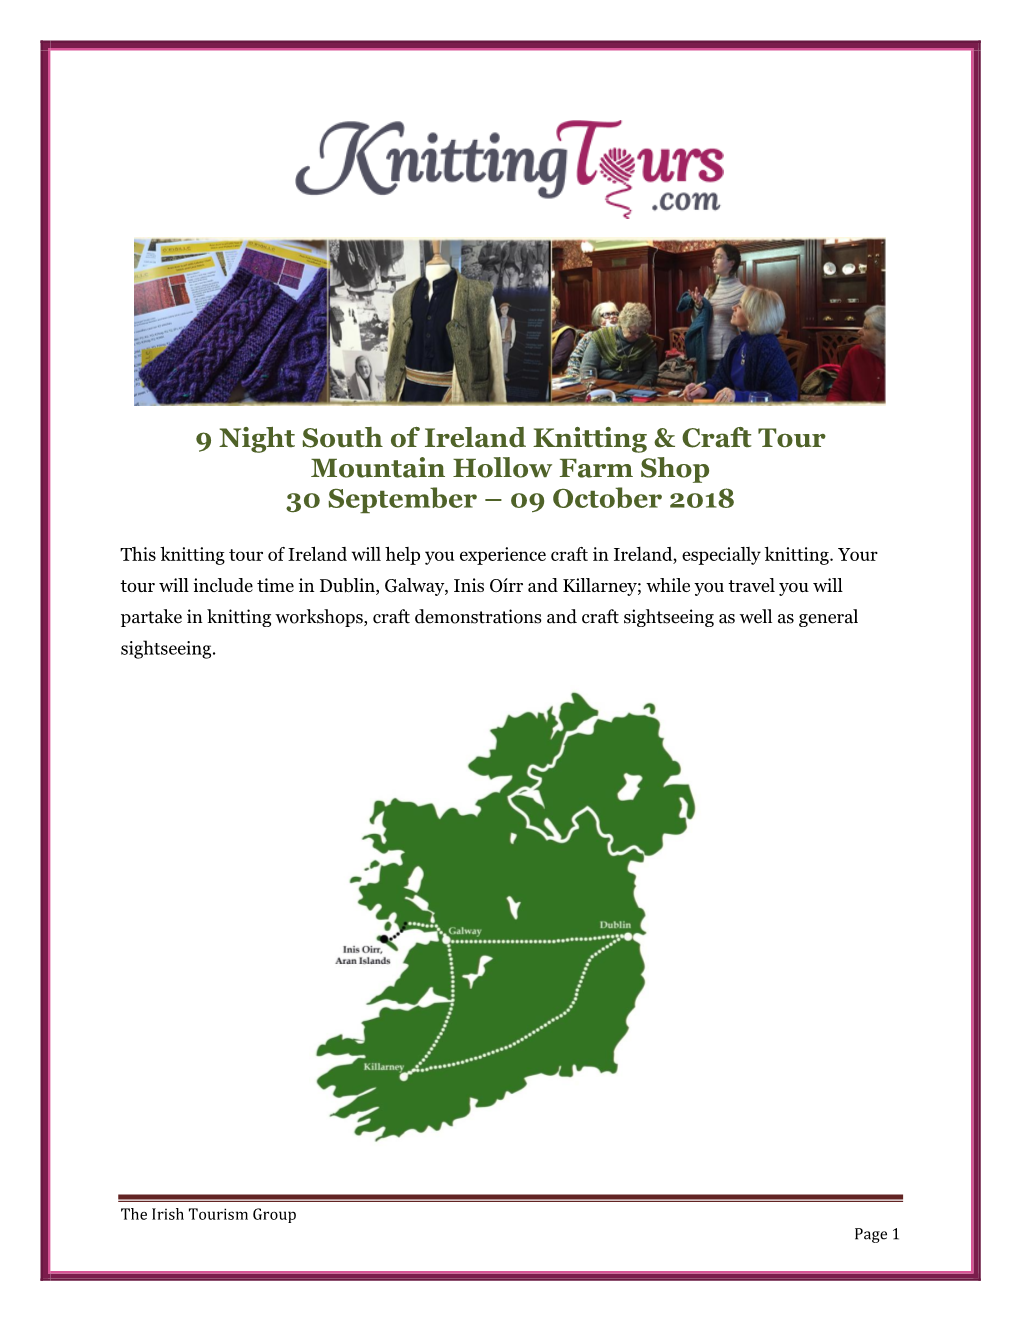 9 Night South of Ireland Knitting & Craft Tour Mountain Hollow Farm